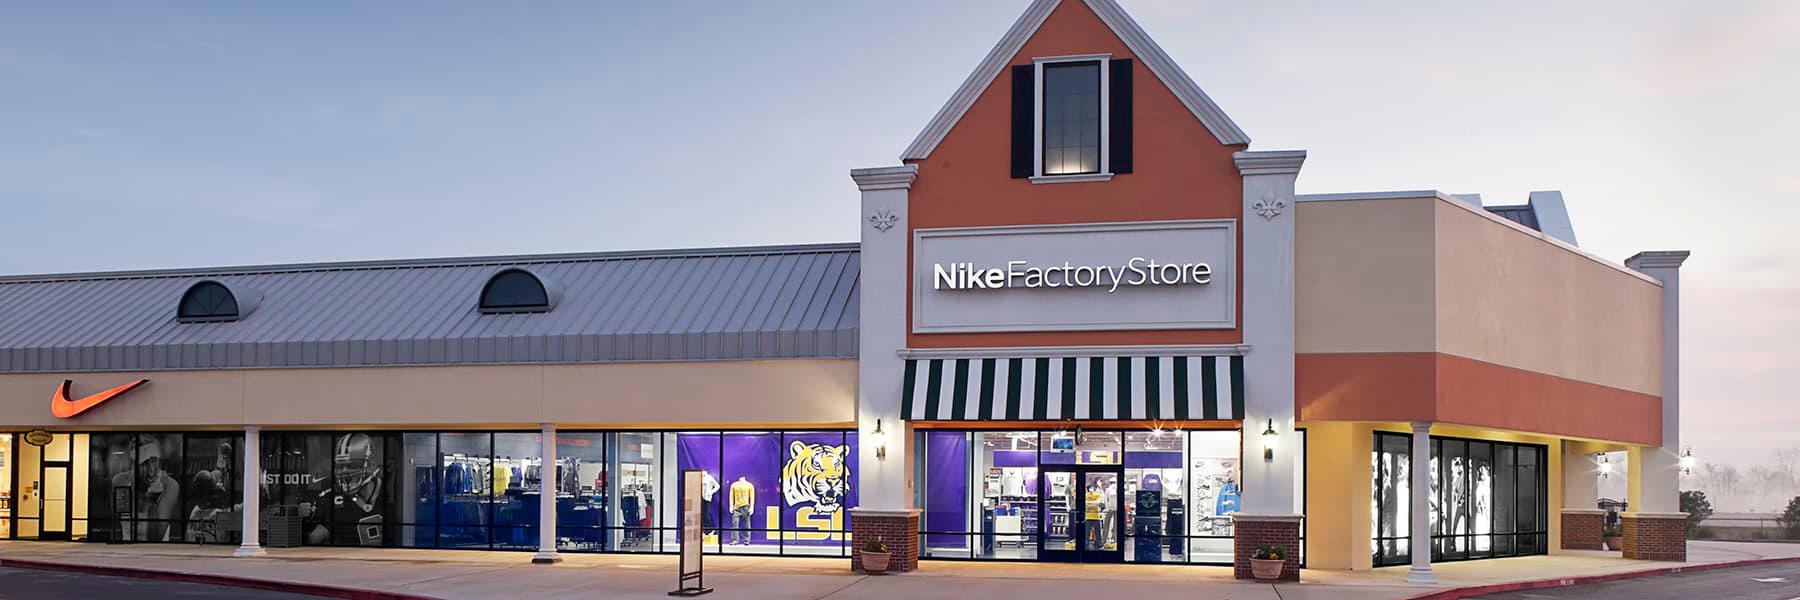 Nike Factory Store - Gonzales - Gonzales, LA 70737 - (225)644-4265 | ShowMeLocal.com